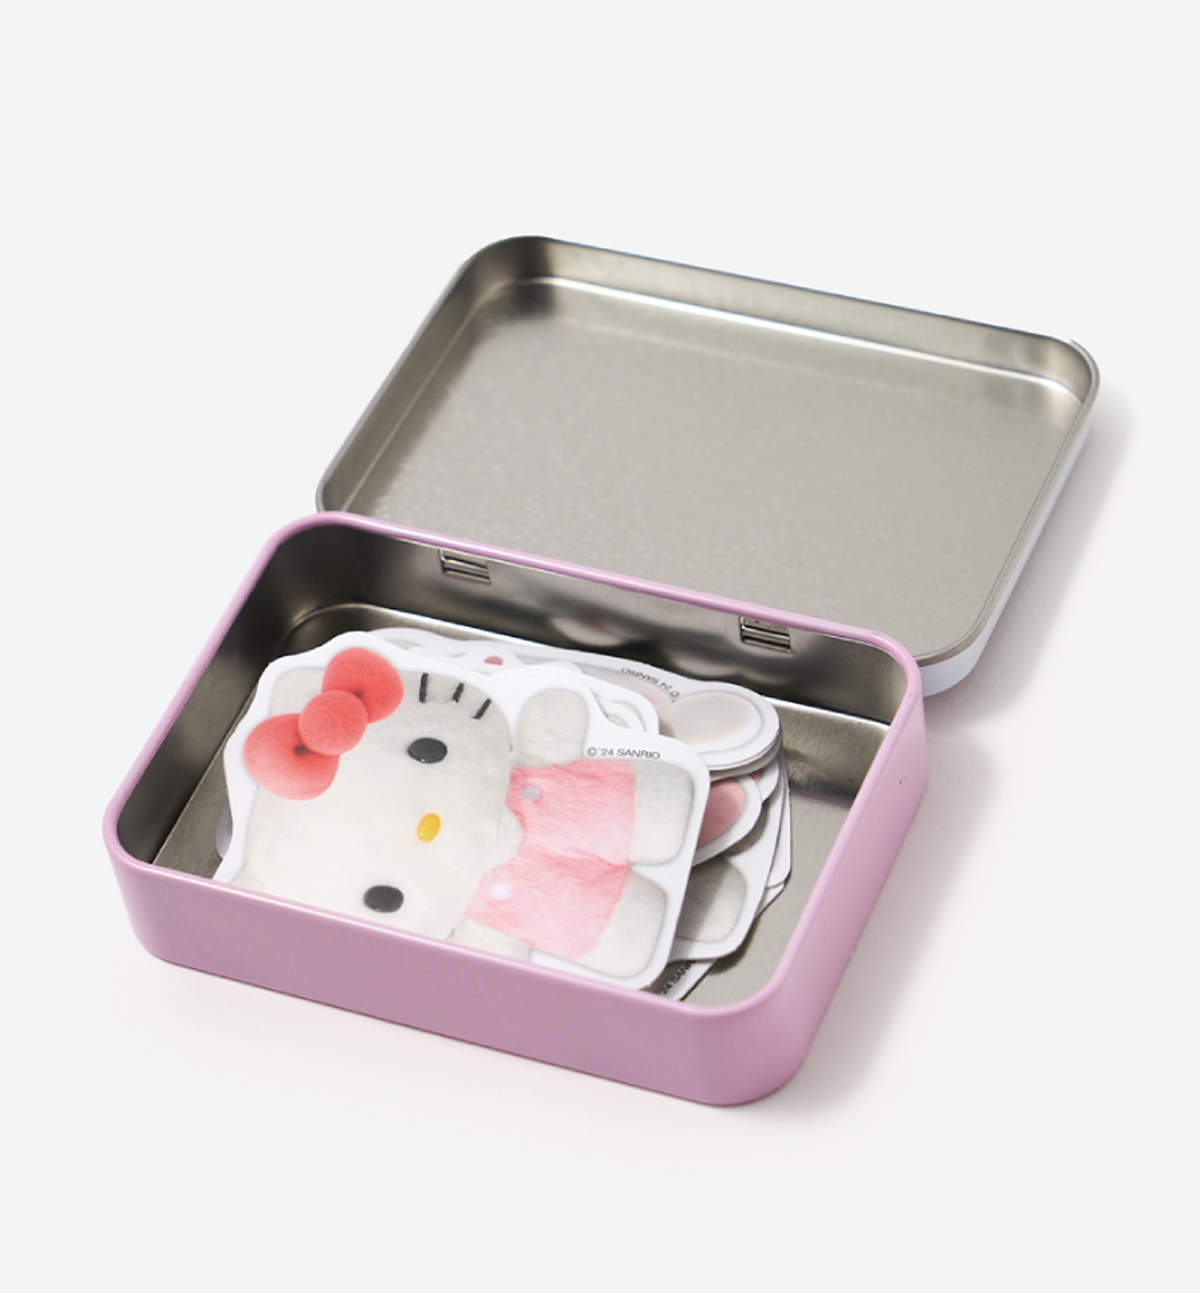 Sanrio Pompom Tin Case Sticker Pack [40 Stickers]